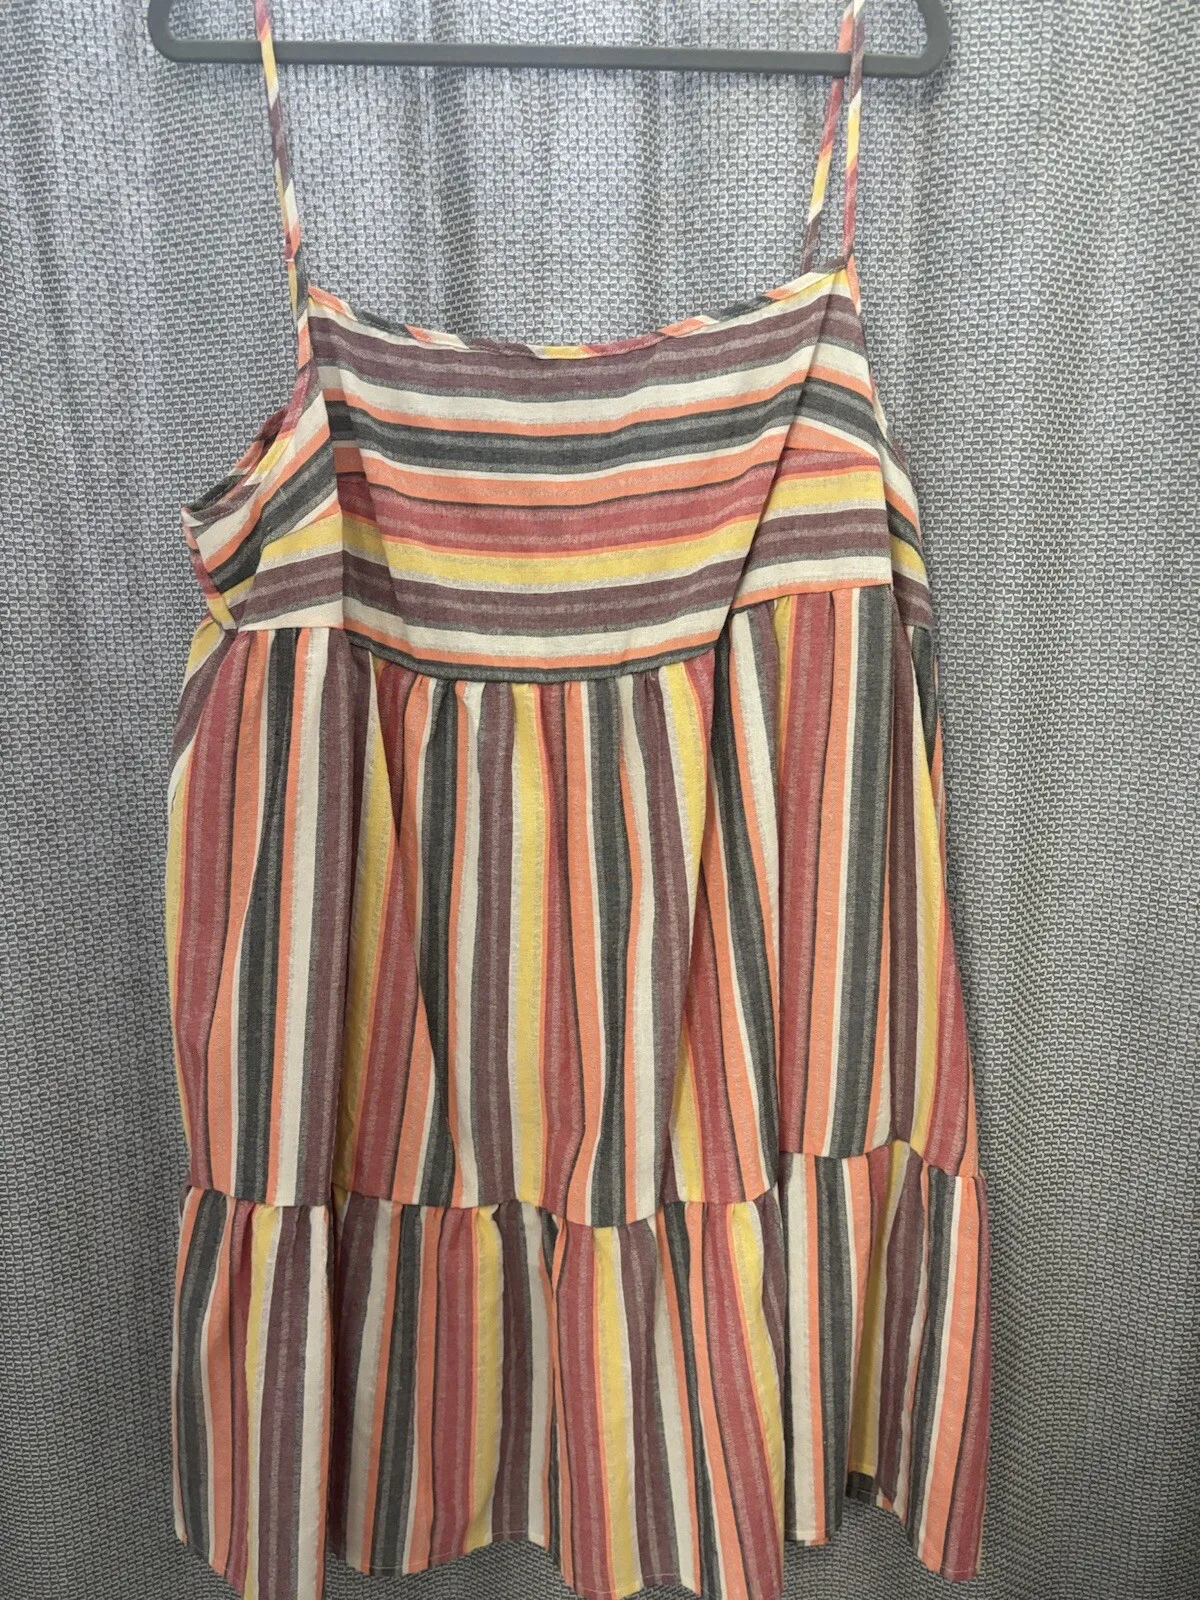 SHEIN Dress 4X Striped Womens Plus Size Multi Color - $14.99